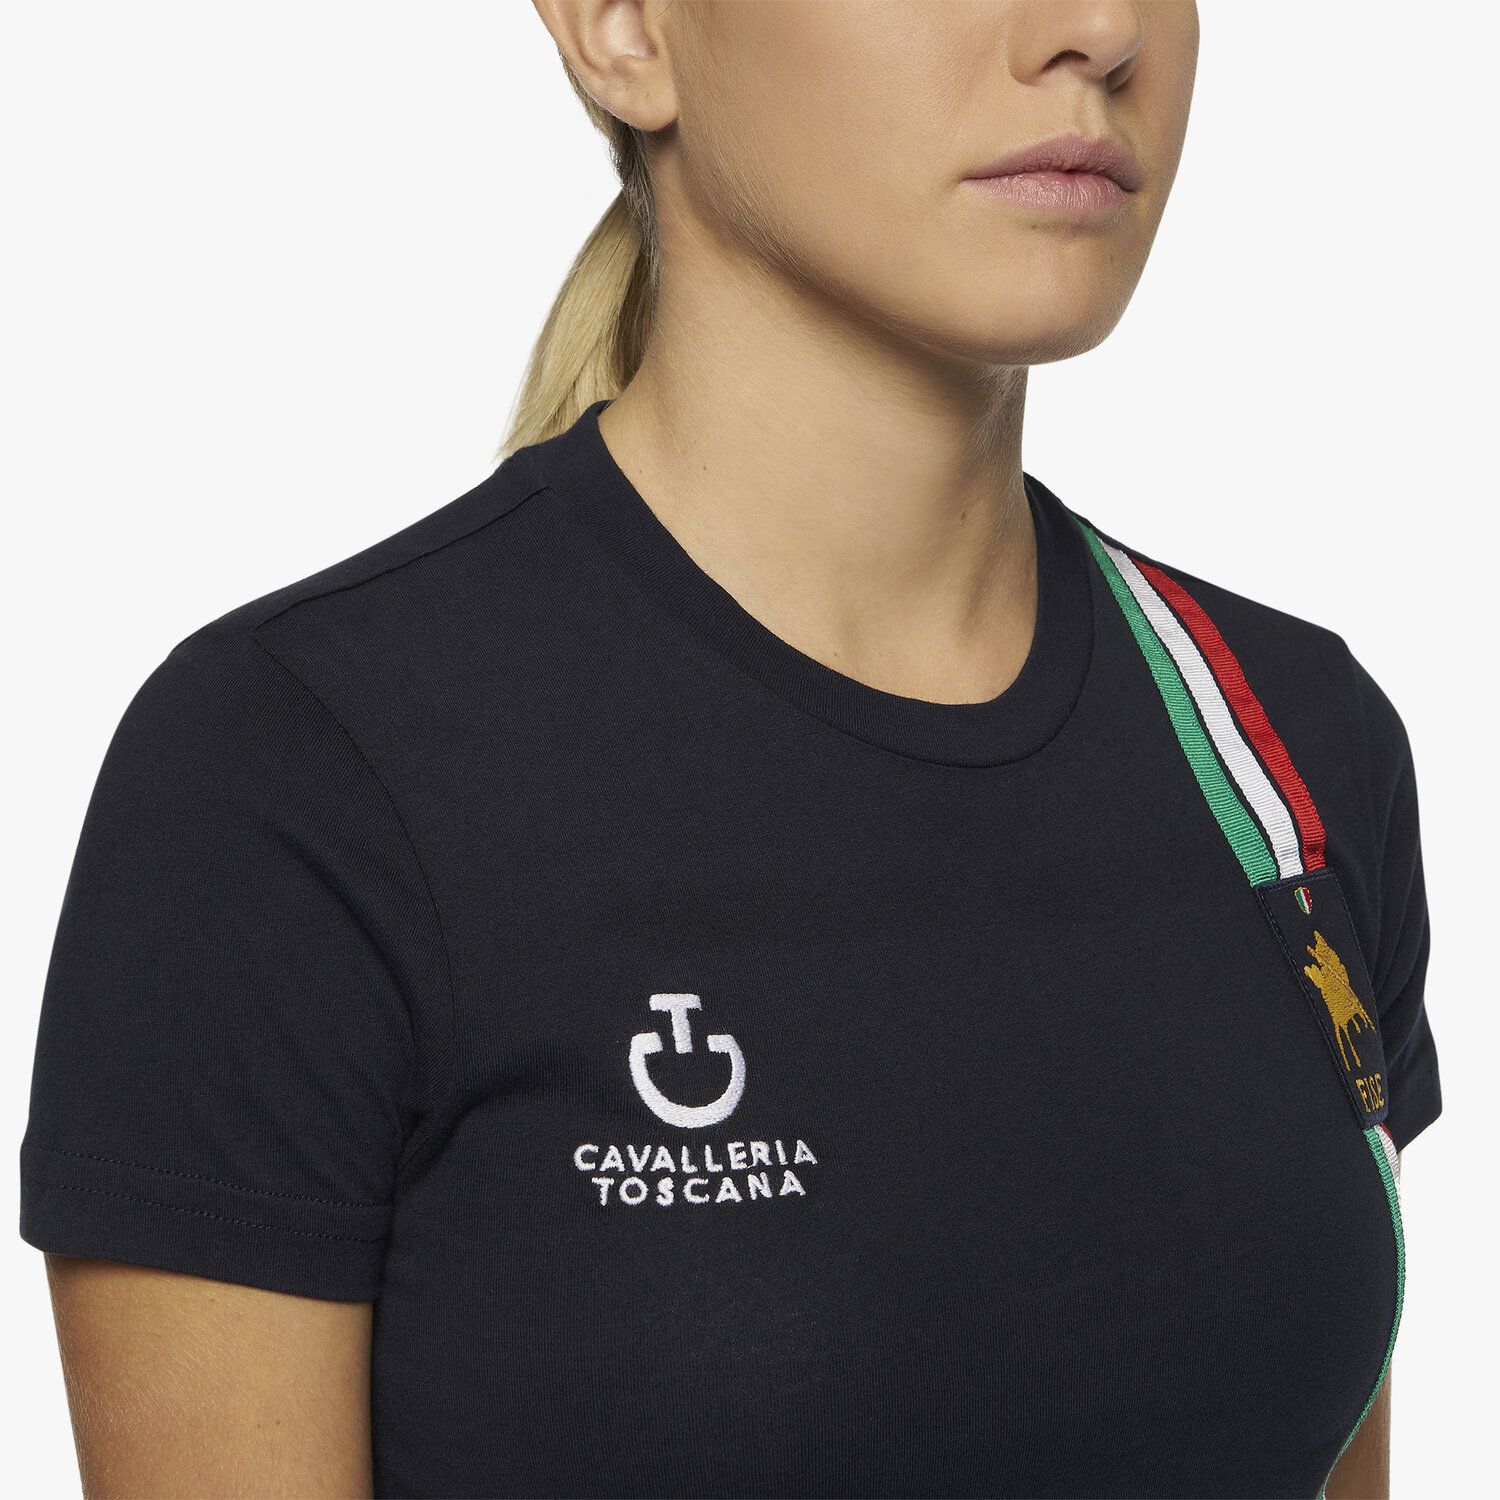 Cavalleria Toscana FISE giril's t-shirt NAVY-6